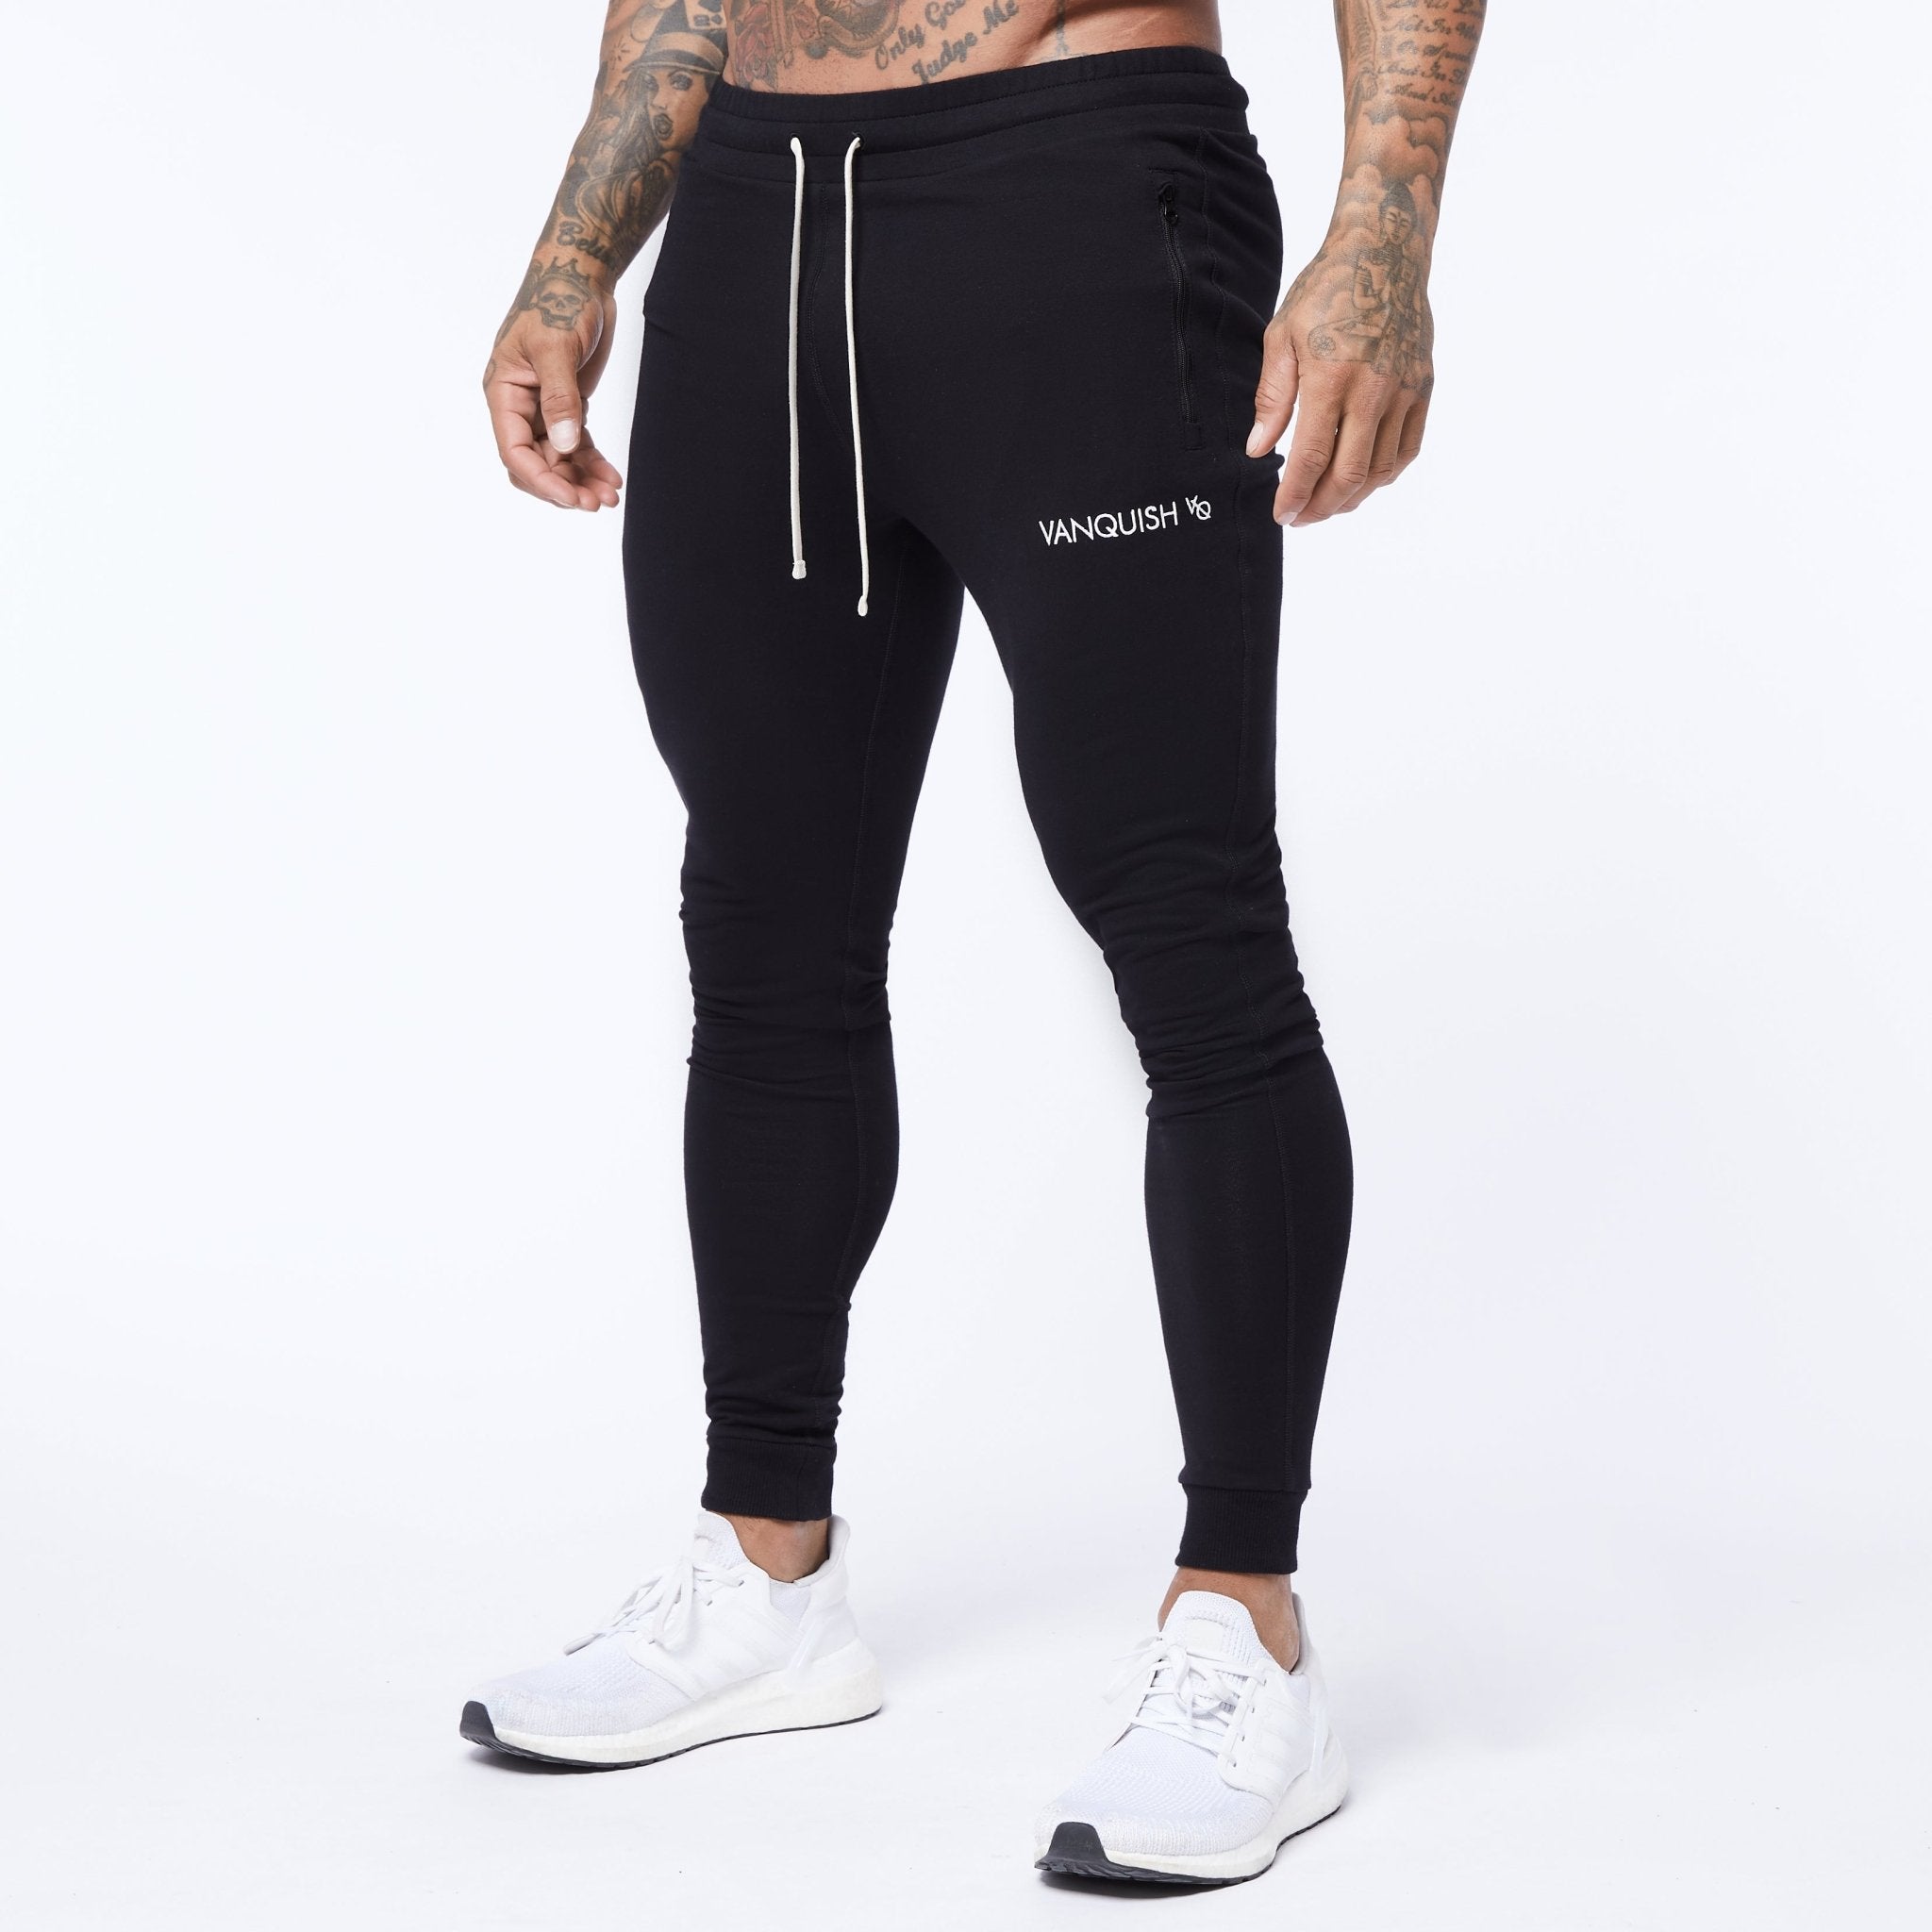 Vanquish Core Black Tapered Sweatpants - Vanquish Fitness